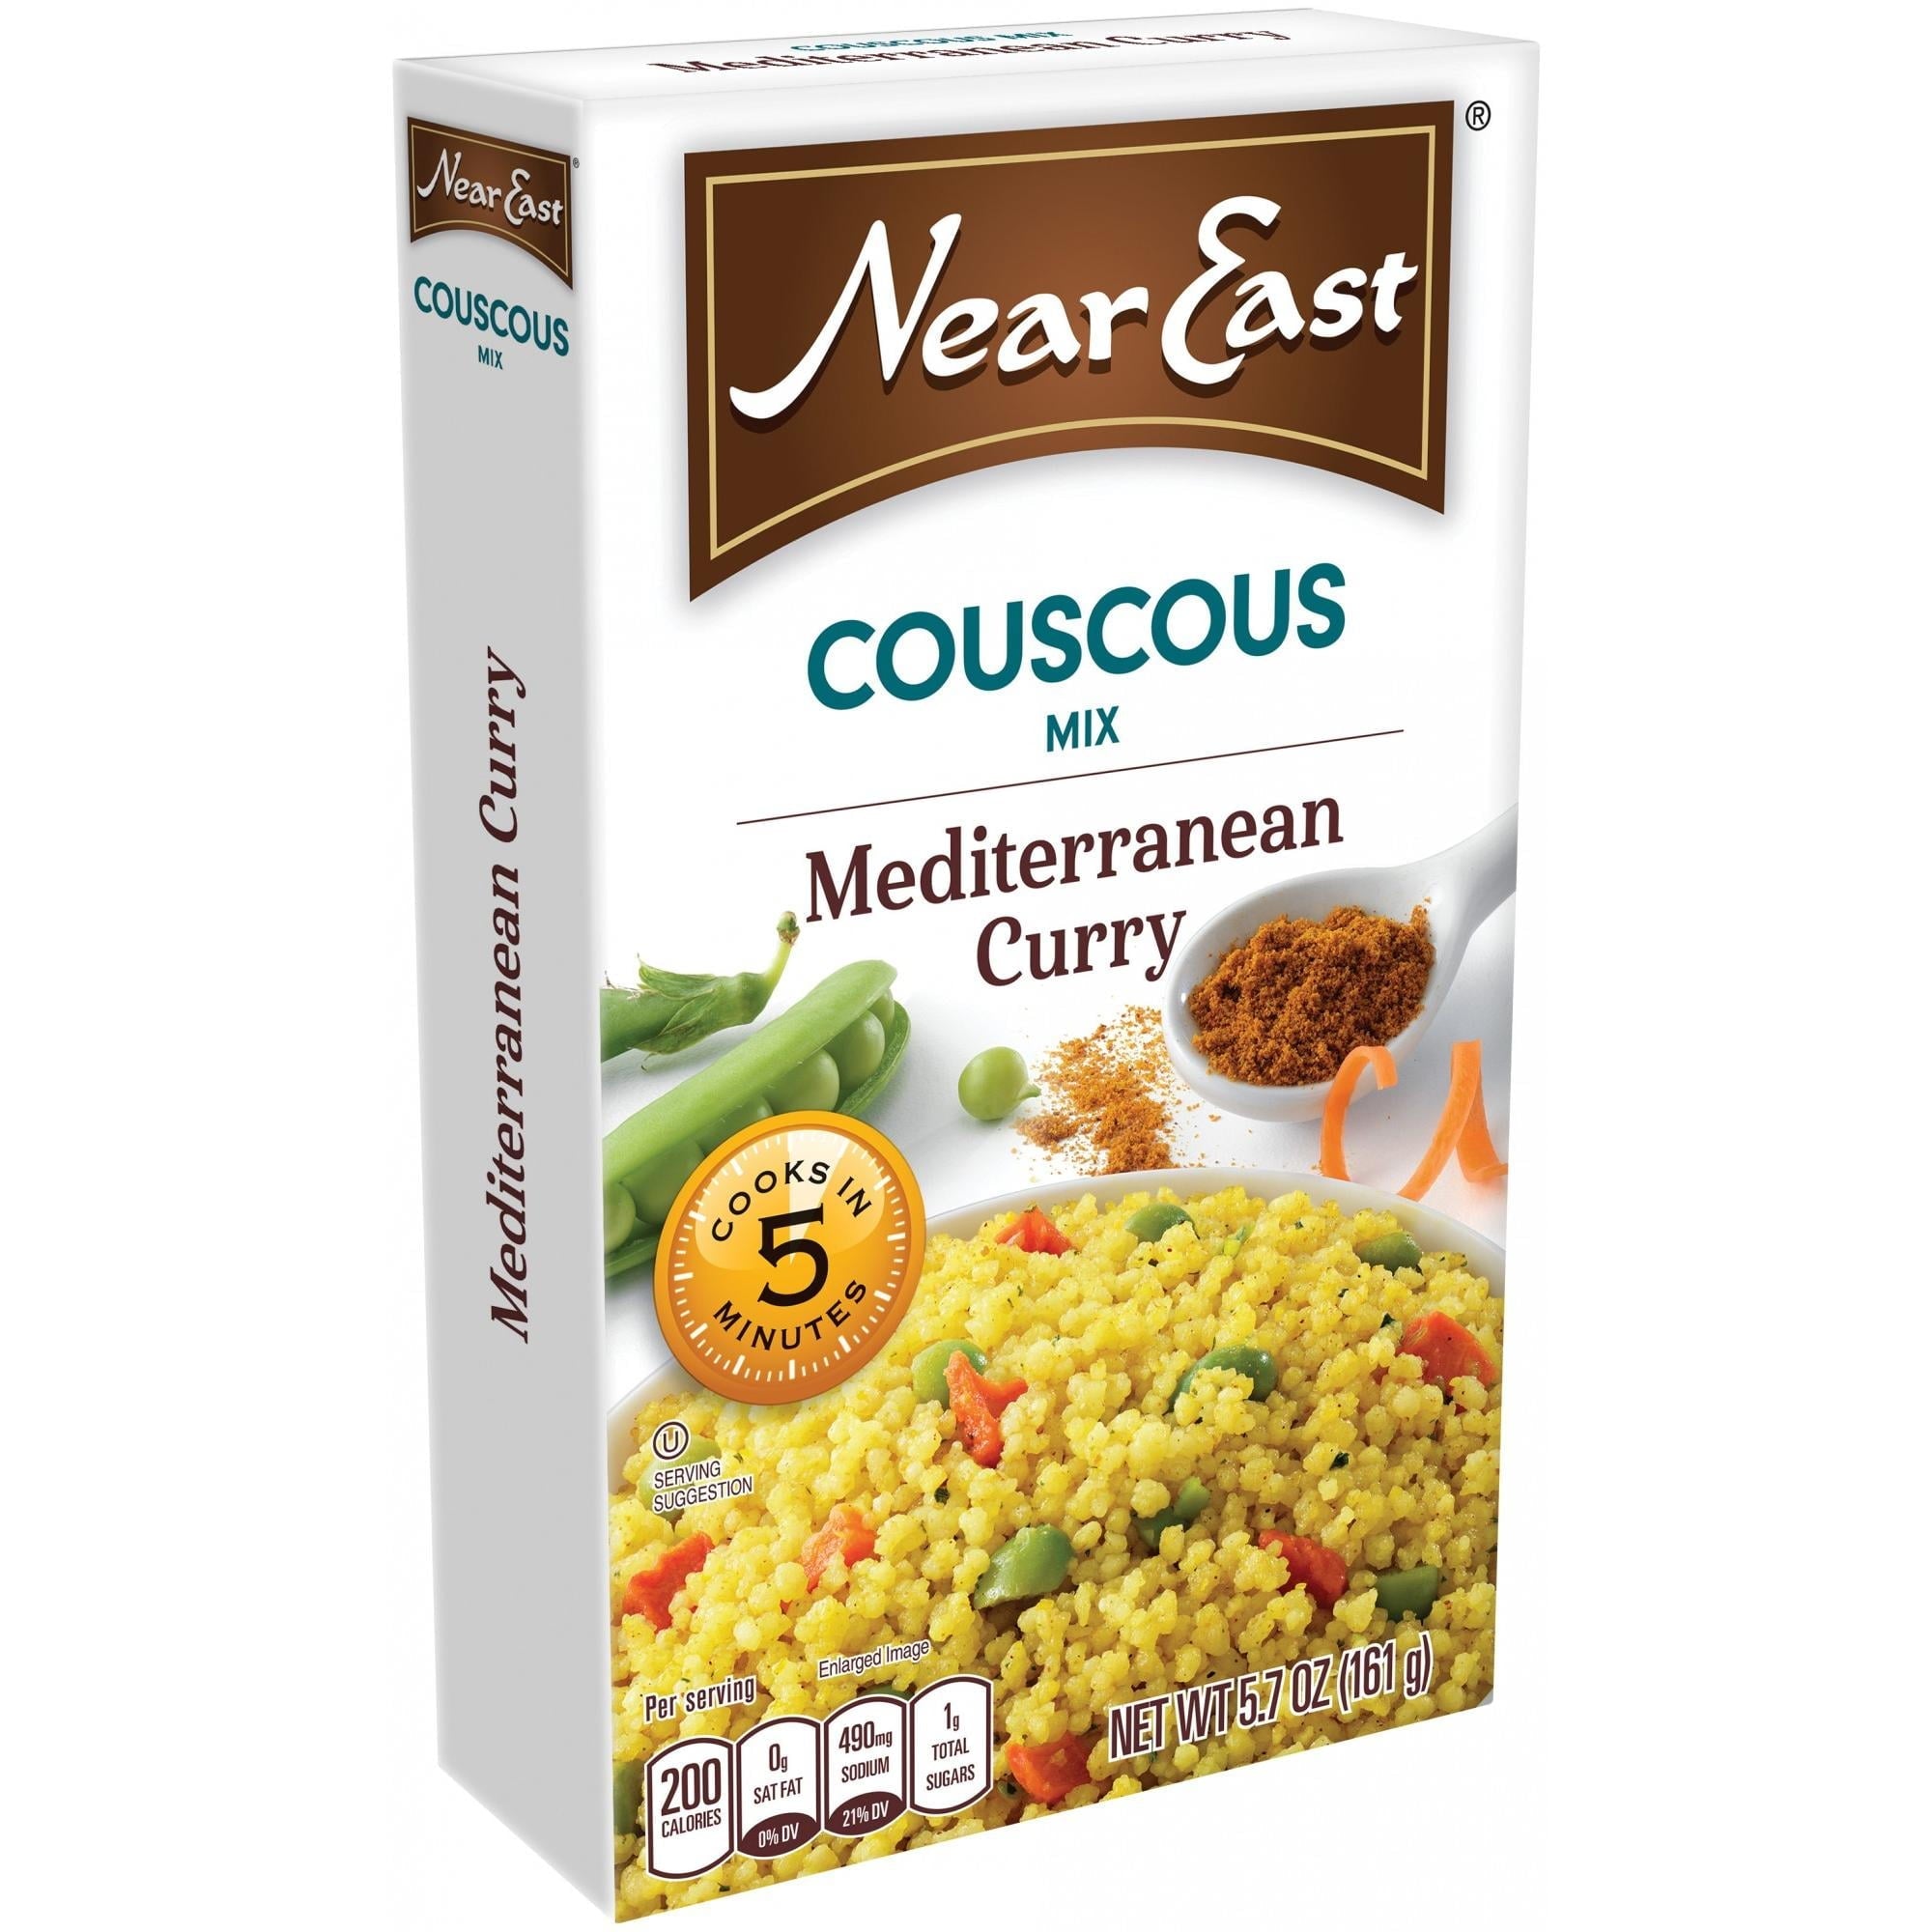 Near East Couscous Mix Mediterranean Curry 5.7 Oz.